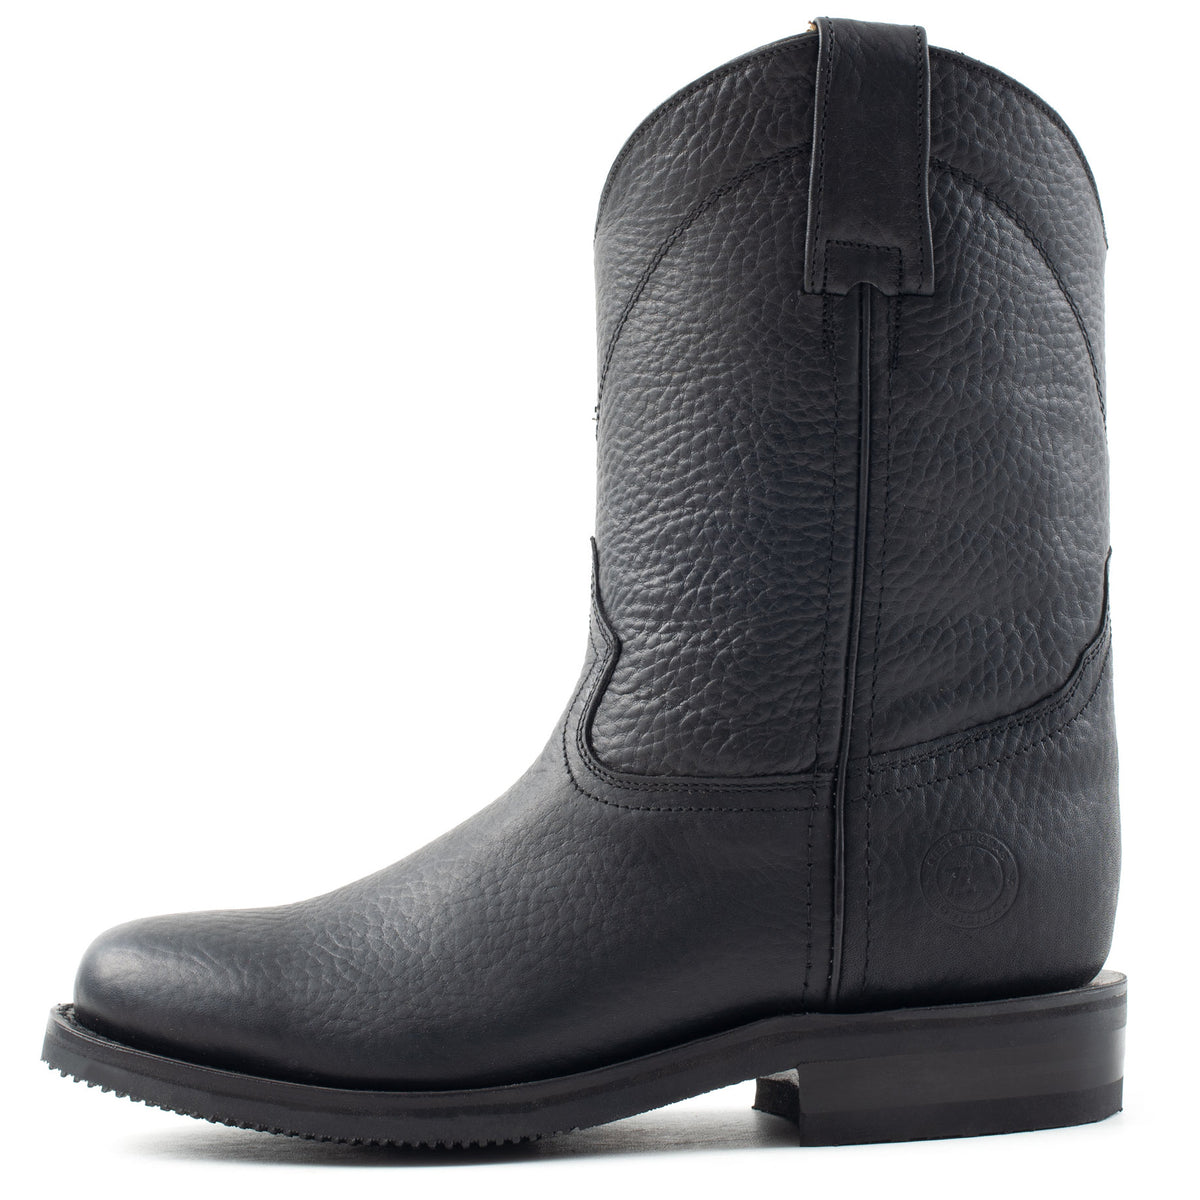 Original Roper Leather Boot 1000-DL